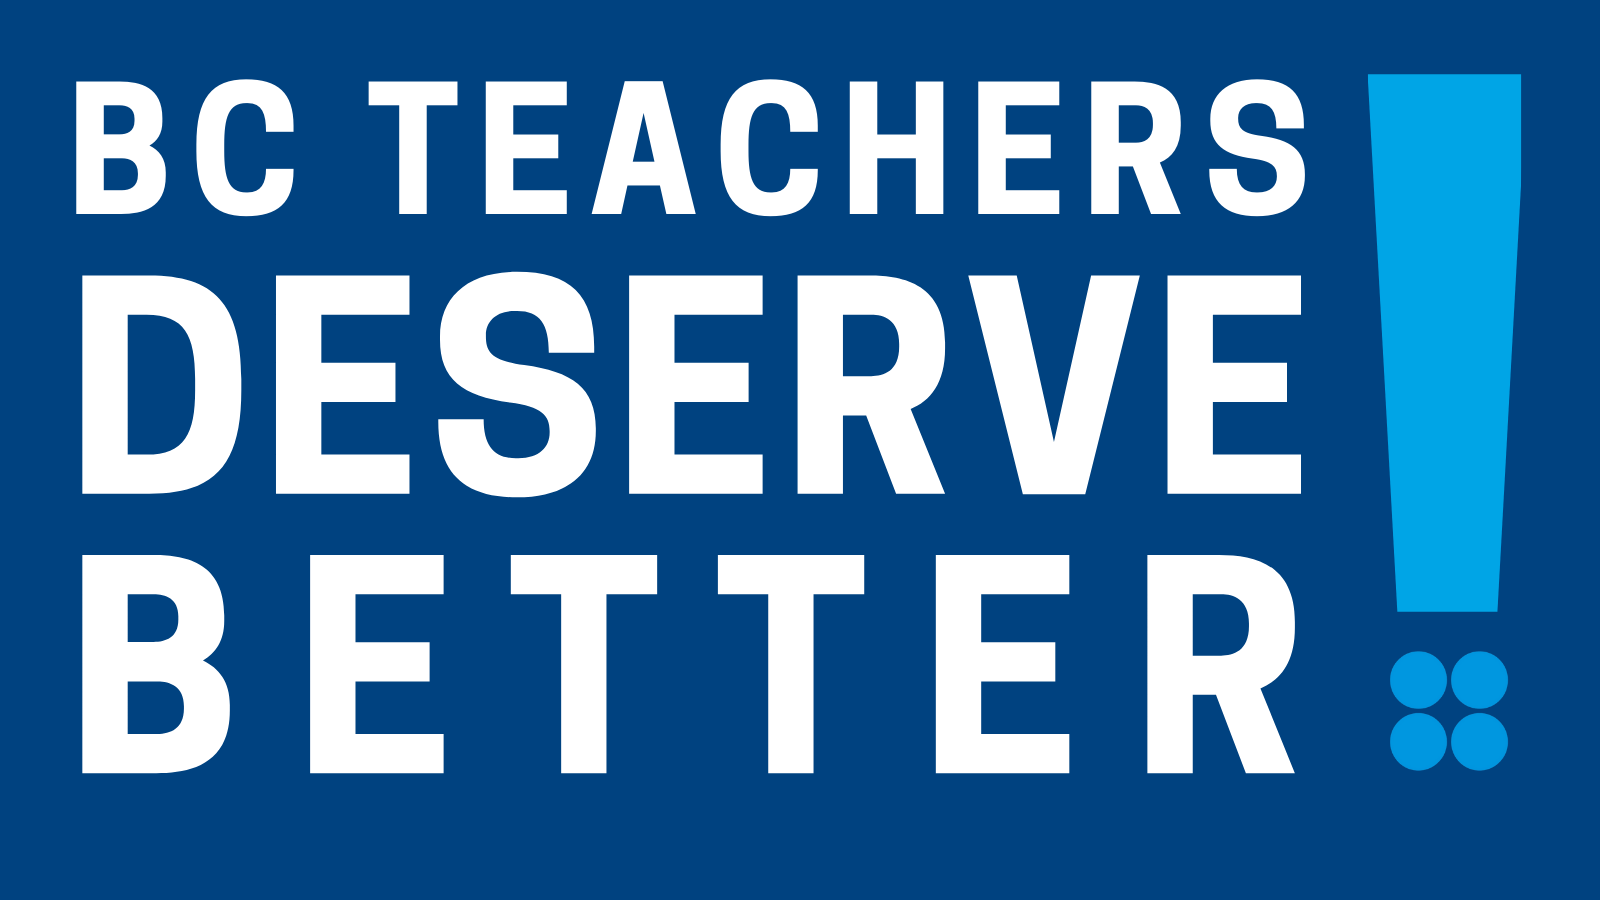 Image read "BC teachers deserve better"